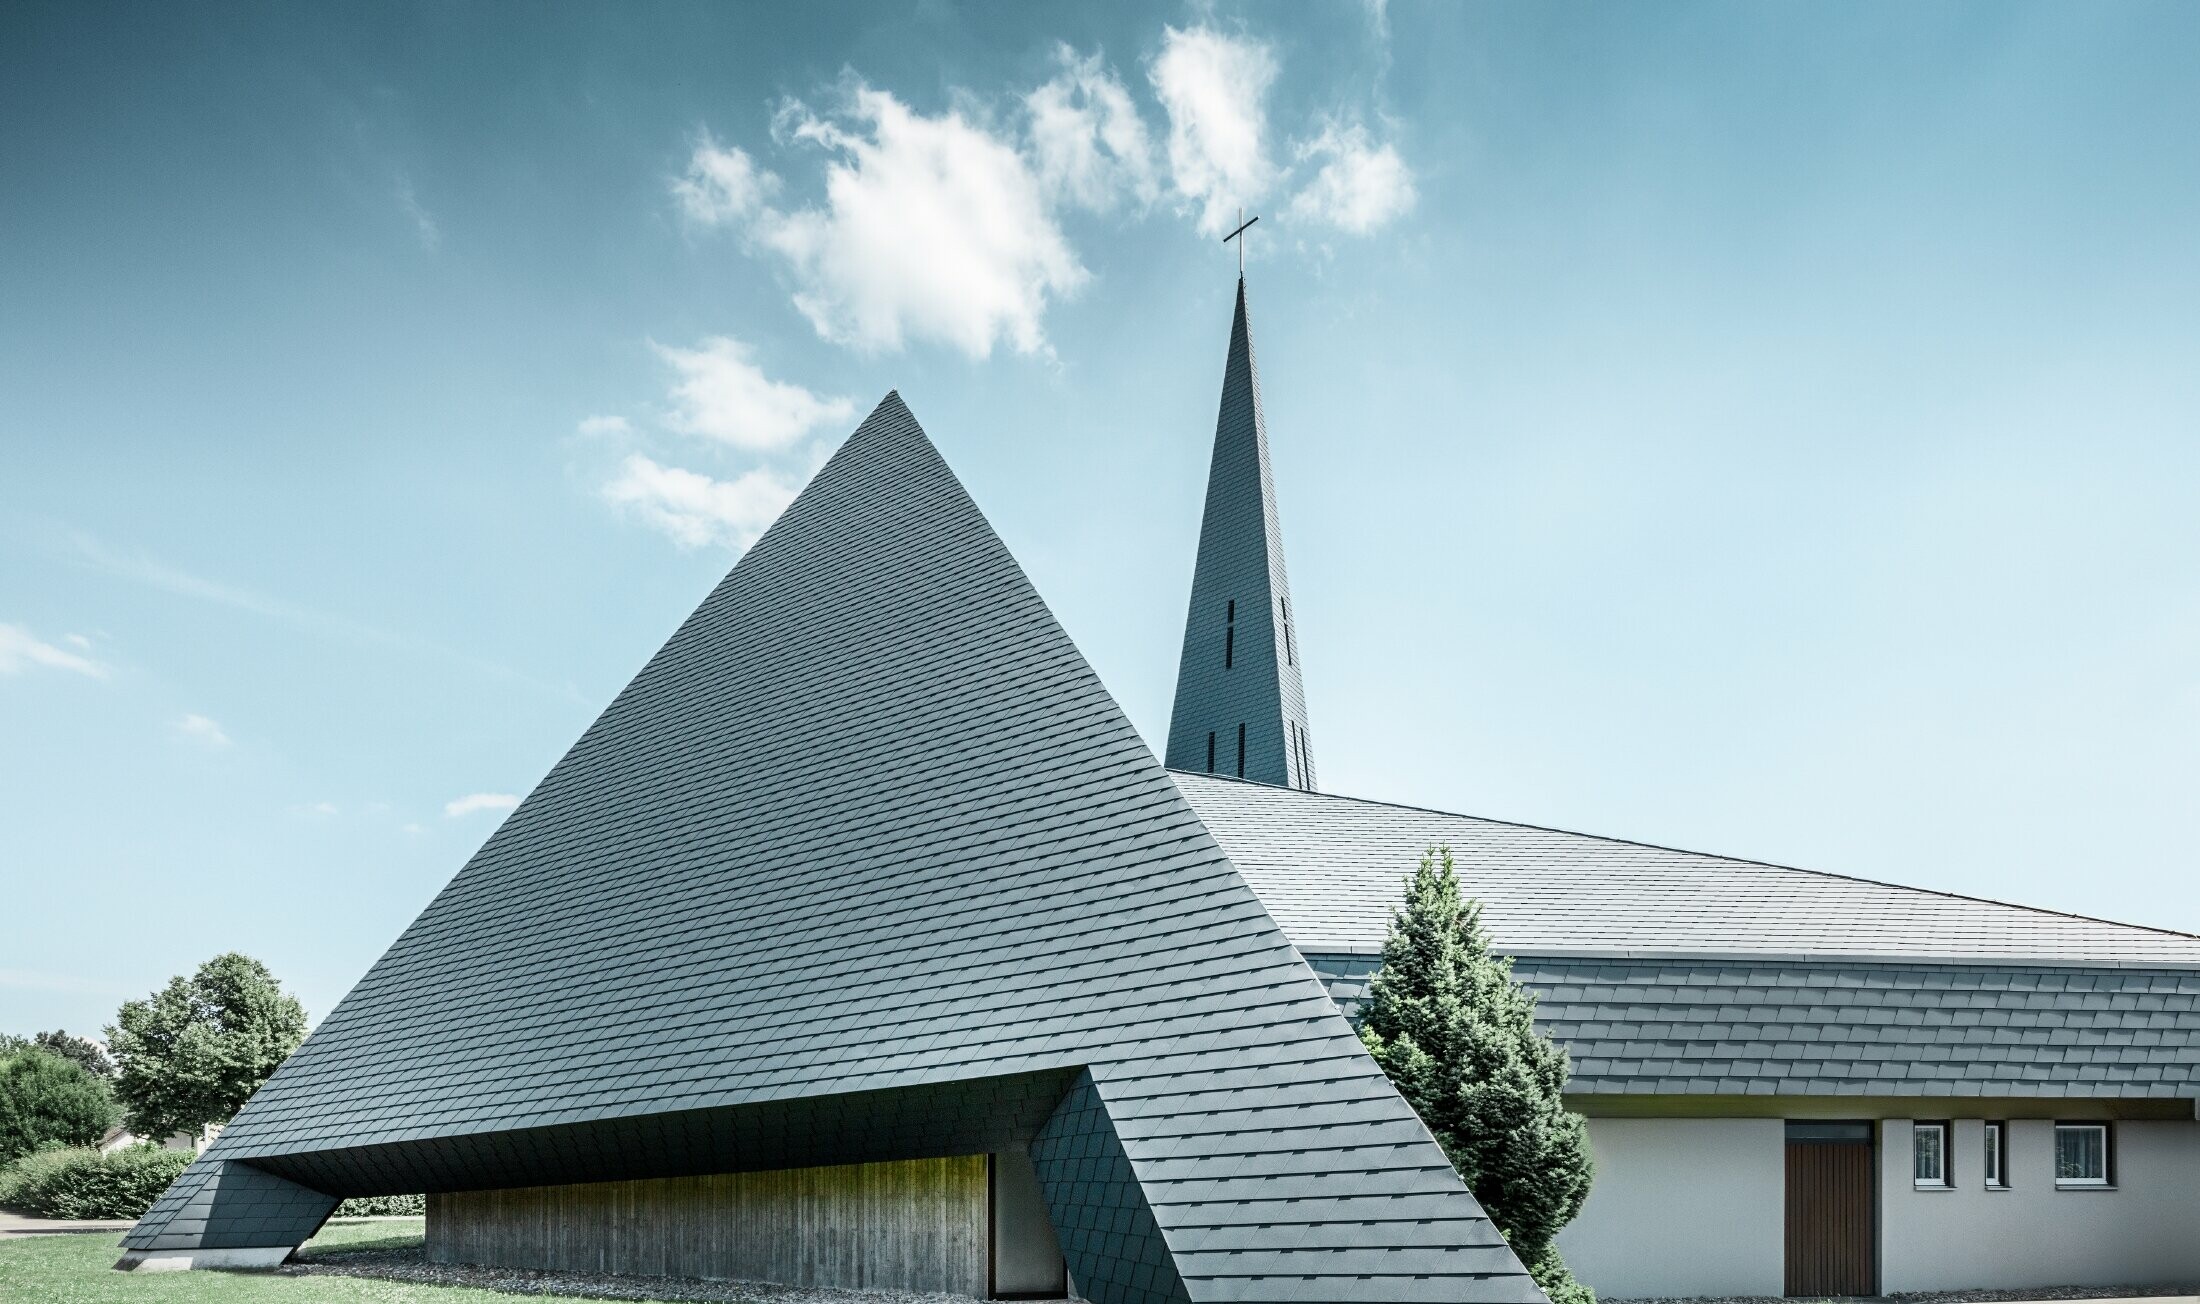 Katolický kostel v Langenau s designem podobným pyramidě pokrytý hliníkovým šindelem PREFA v antracitové barvě